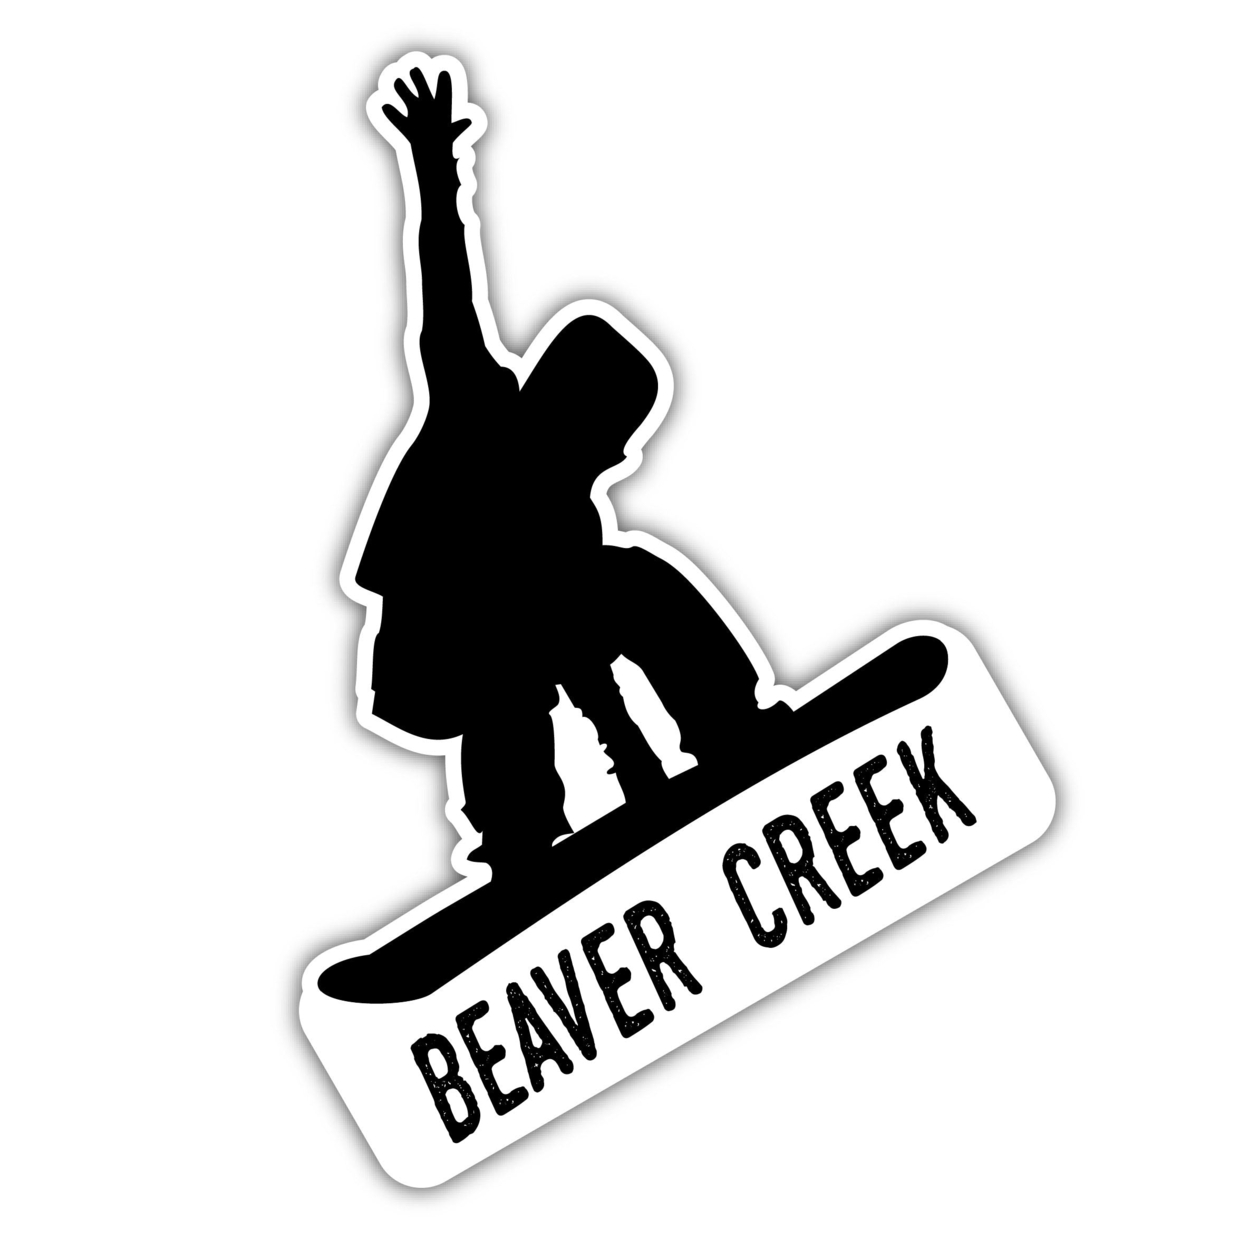 Beaver Creek Colorado Ski Adventures Souvenir Approximately 5 X 2.5-Inch Vinyl Decal Sticker Goggle Design